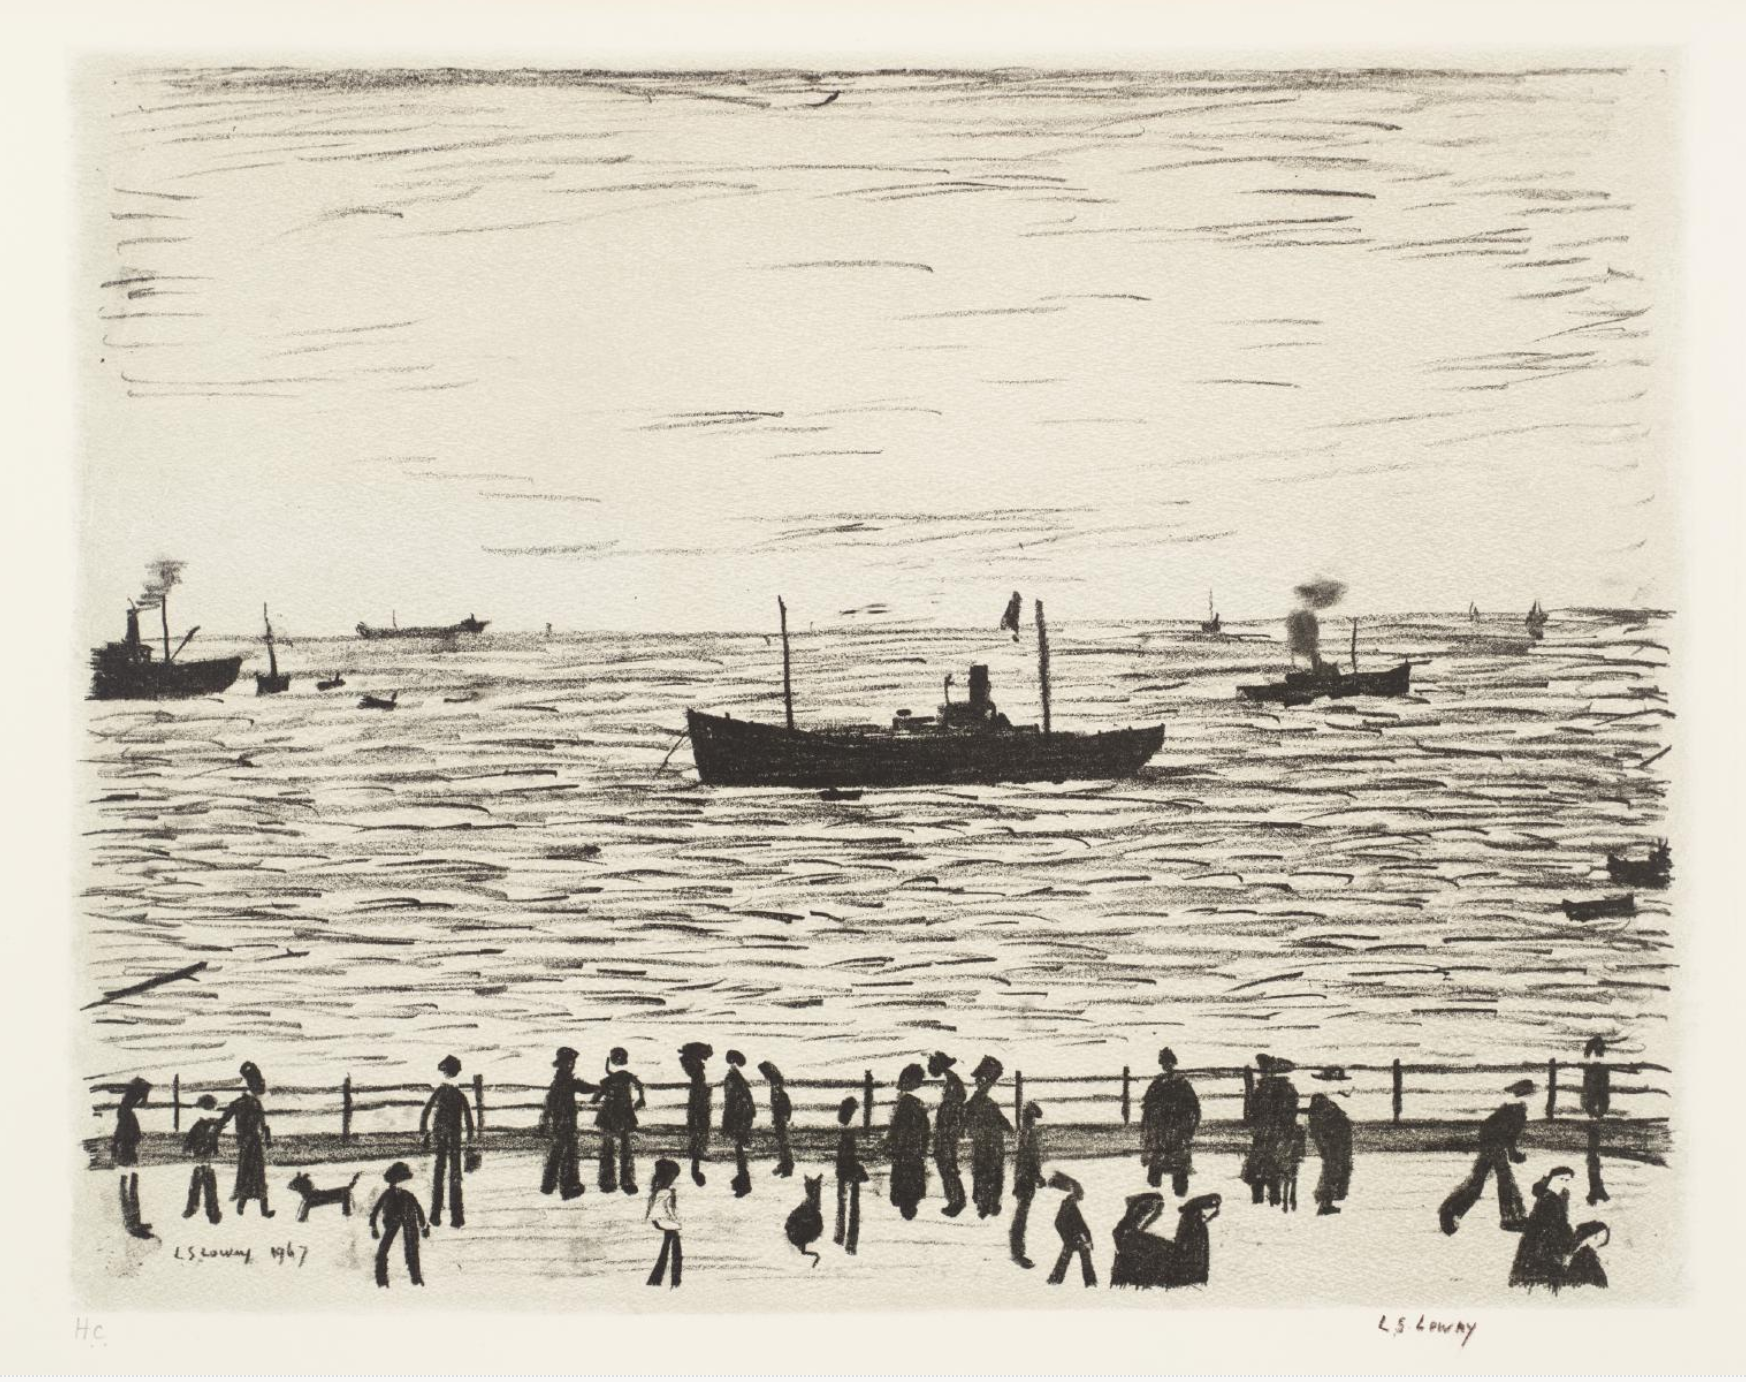 Seaside Promenade (1967-8) by Laurence Stephen Lowry (1887 - 1976), English artist.